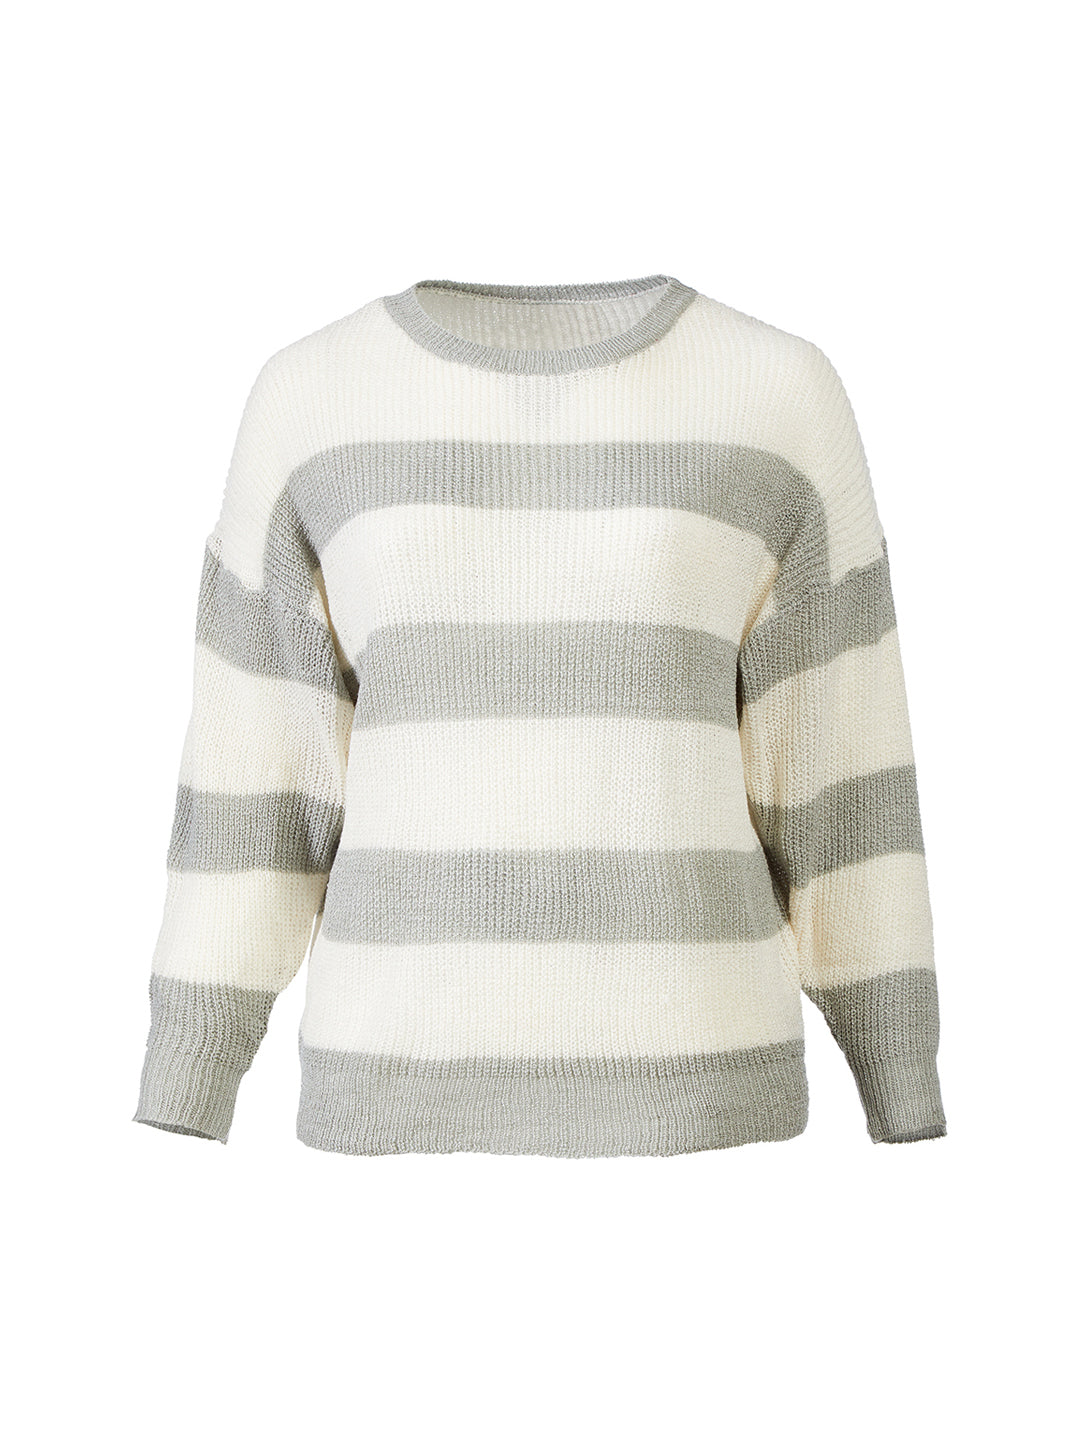 Stripe Summer Knit Sweater | Hayden Los Angeles | Gwynnie Bee